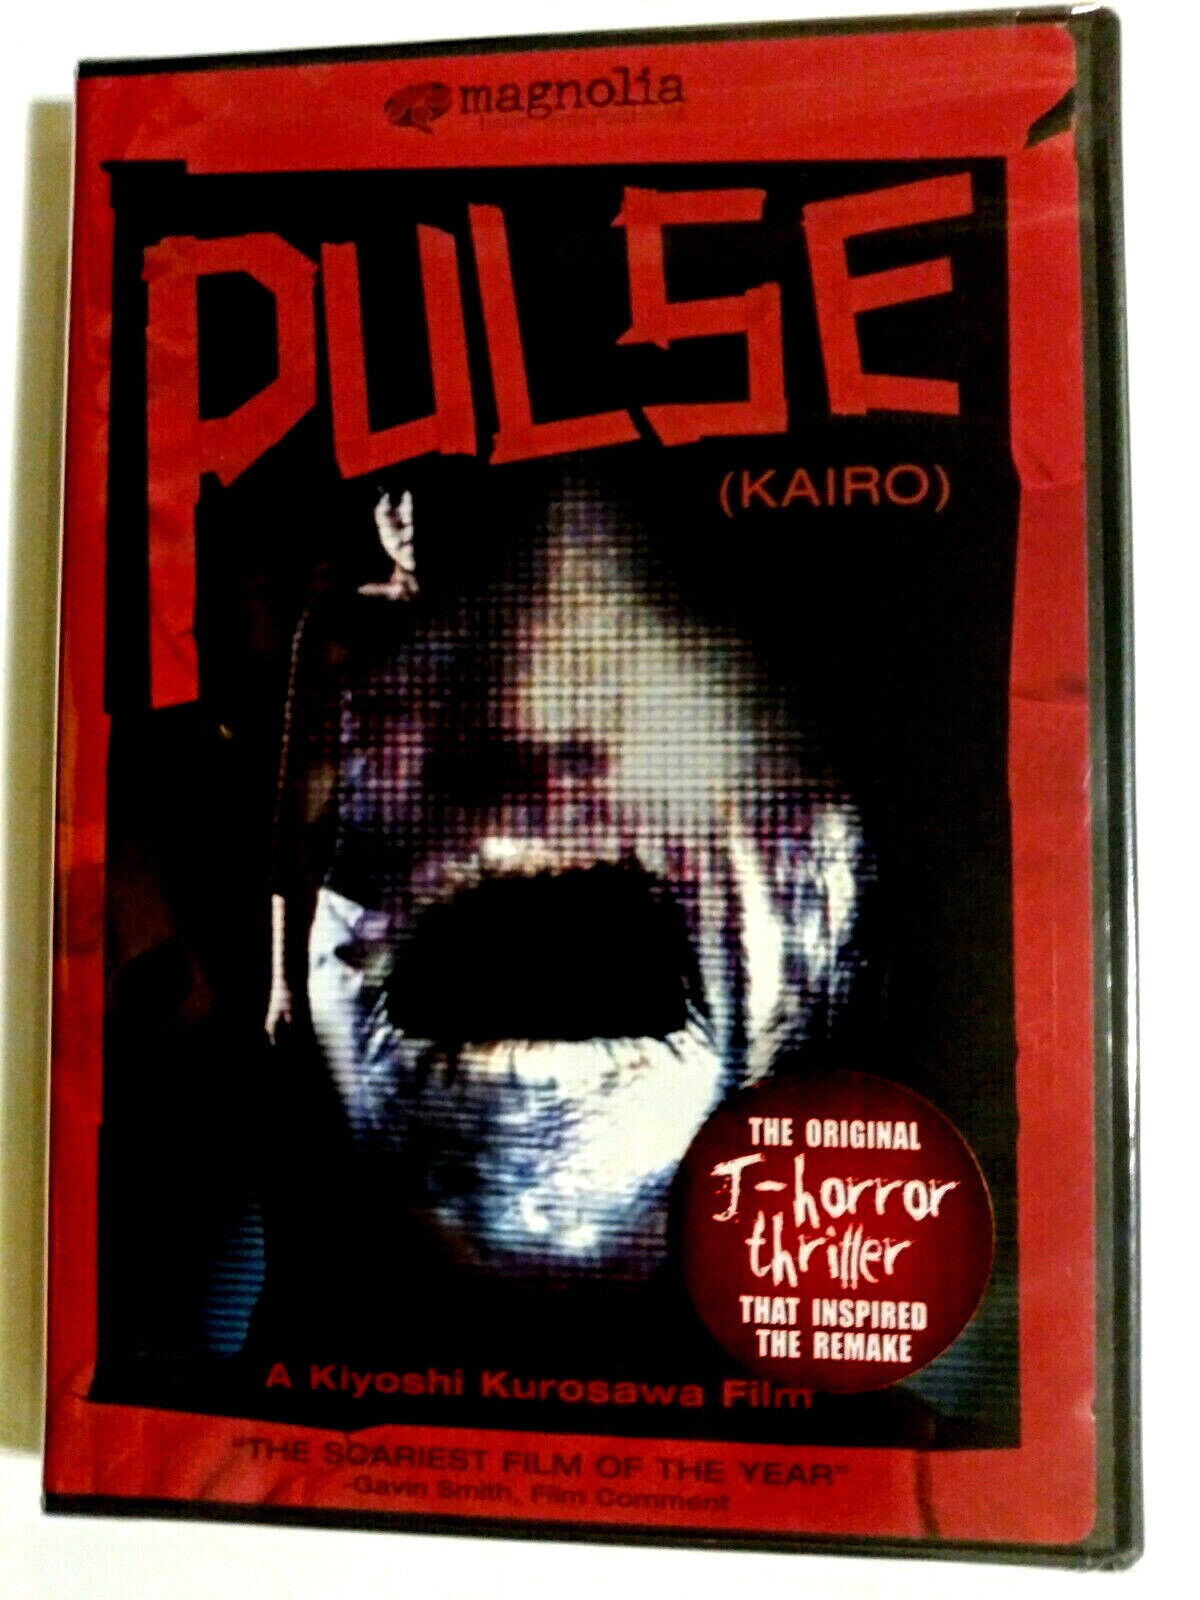 Pulse (Kairo) DVD 2001 Original Japanese Language J-Horror scary